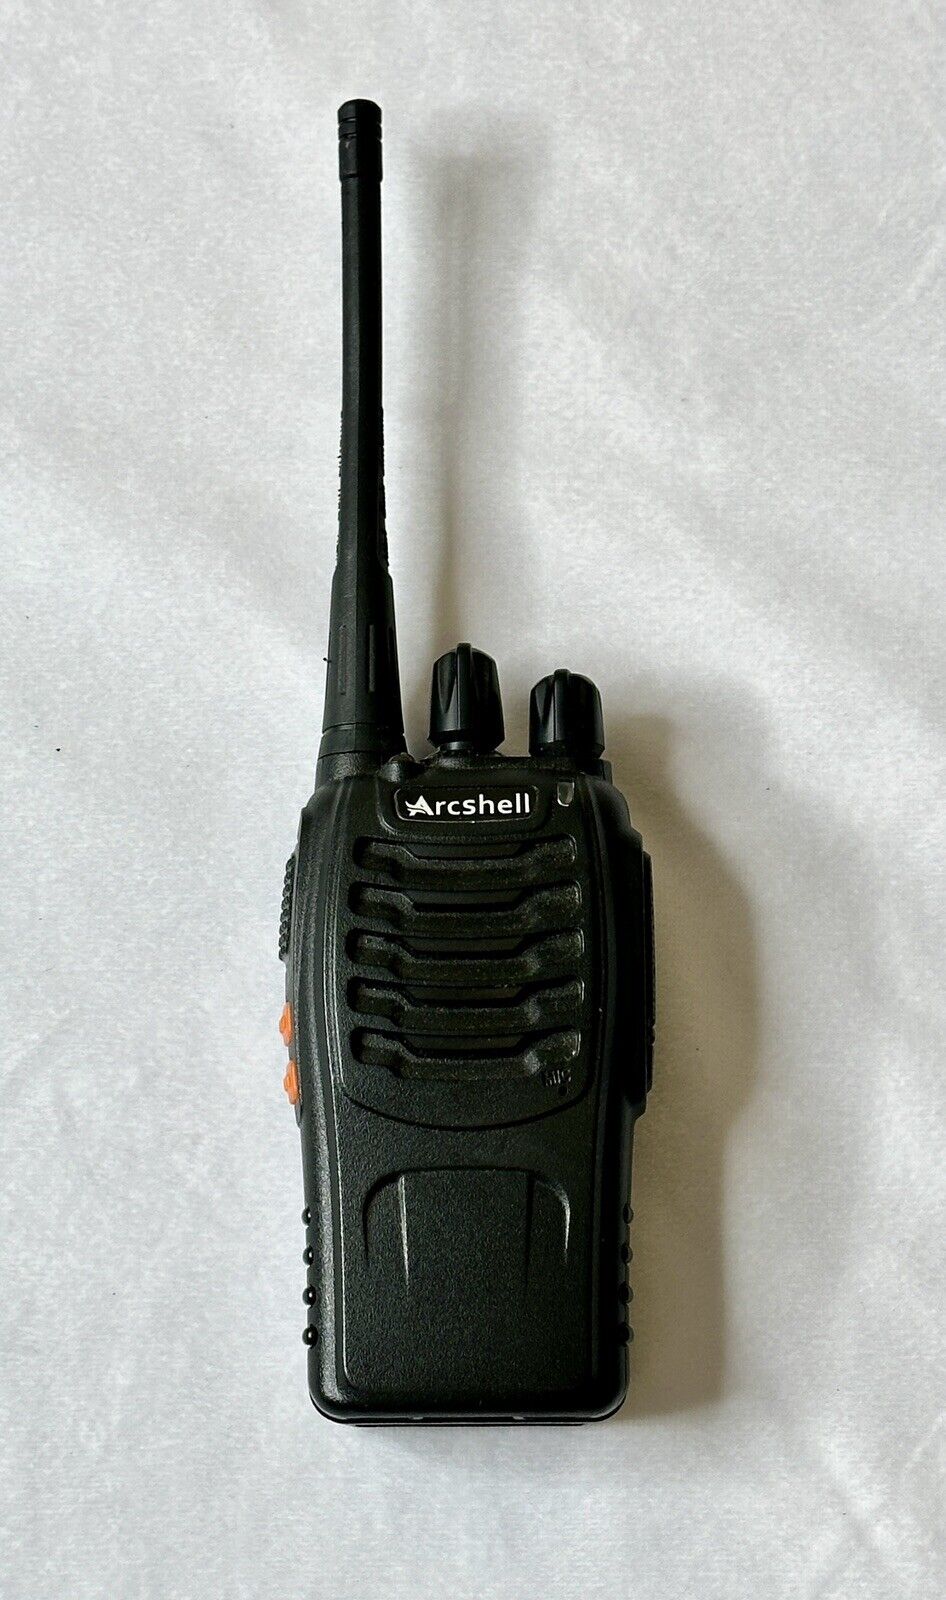 Arcshell AR-5 Two-Way Radio UHF FM Transceiver Walkie Talkie - TESTED